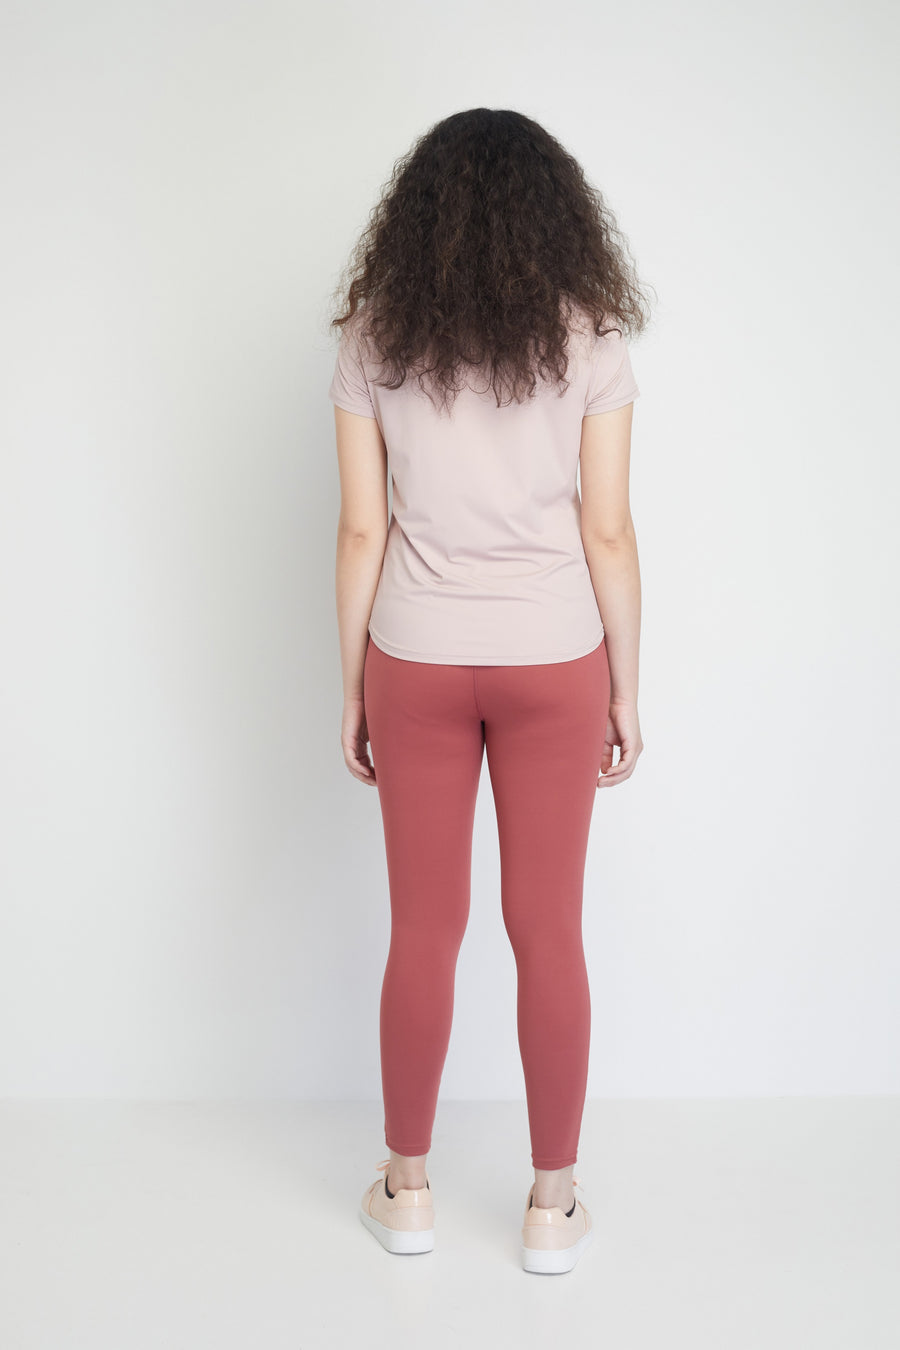 Saylor Women Short Sleeves Top (Pink)